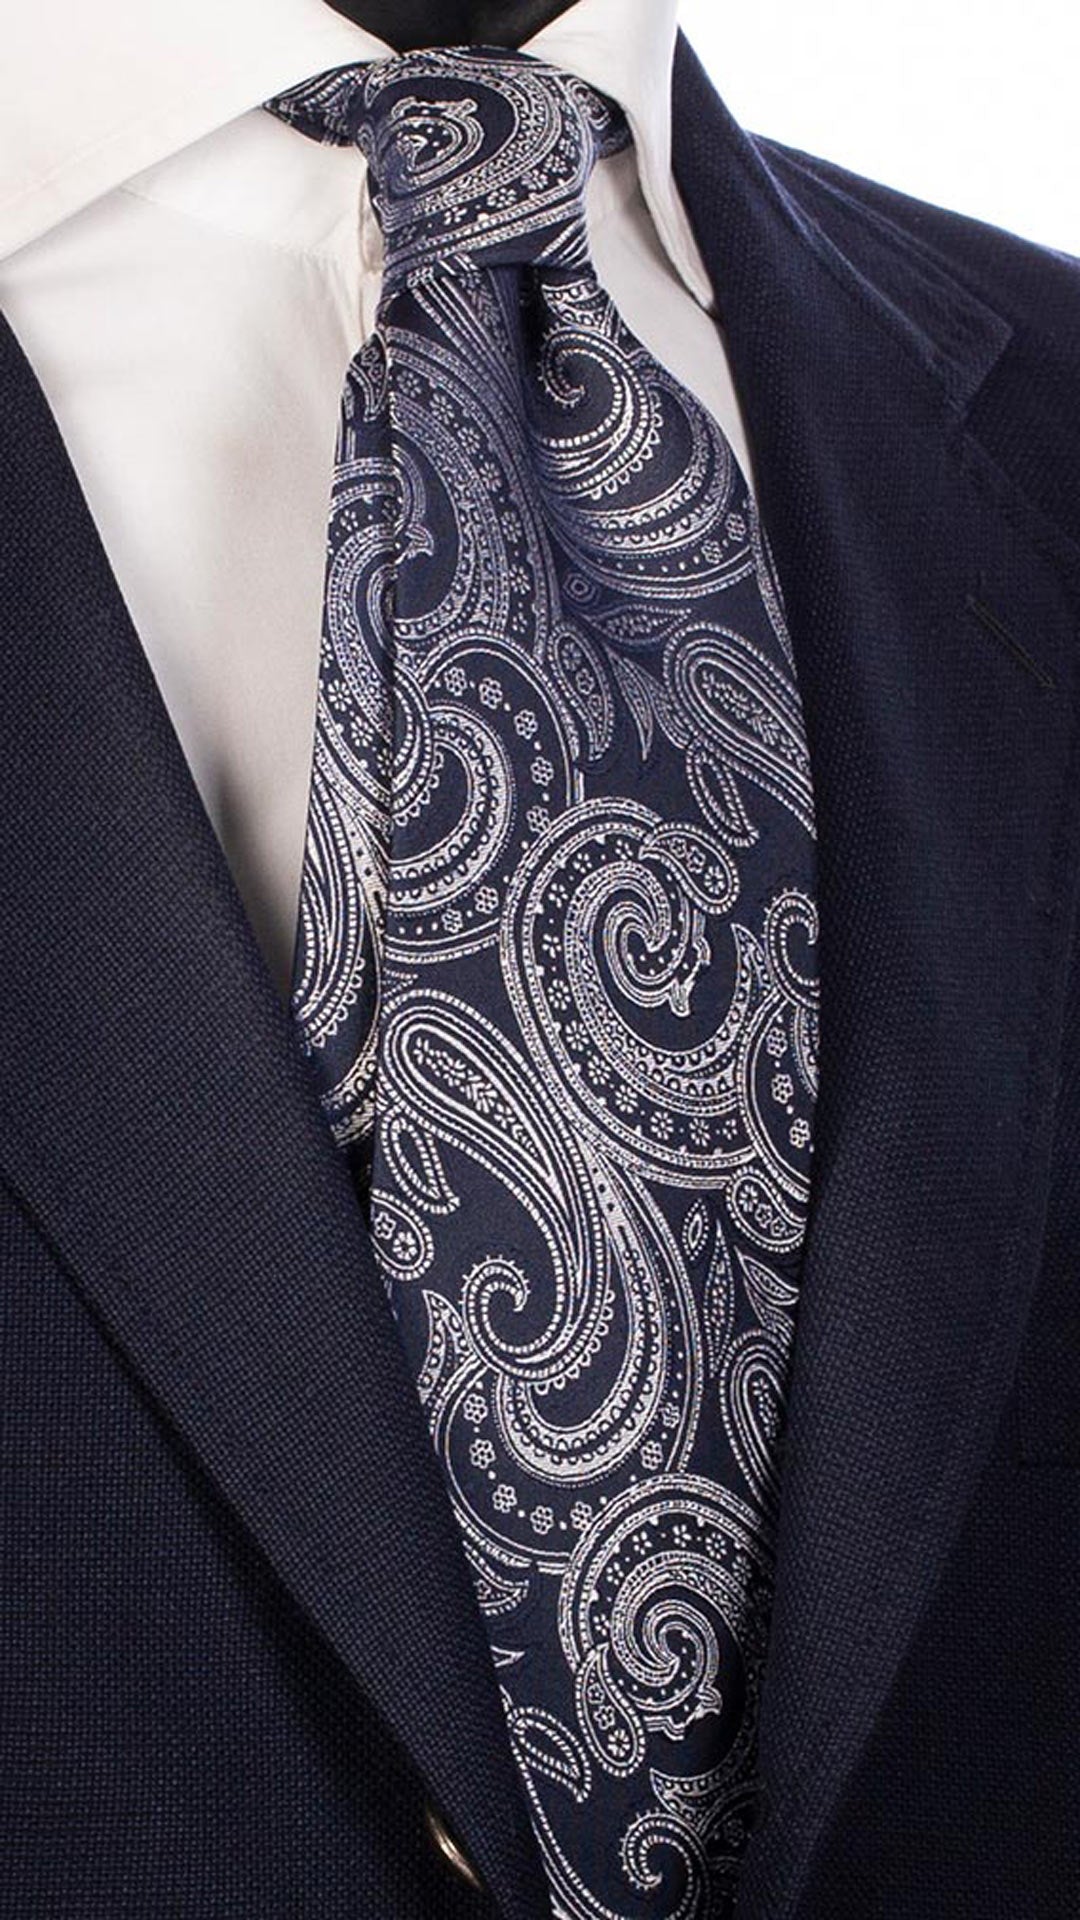 Cravatta da Cerimonia di Seta Blu Paisley Bianchi CY4546 made in Italy Graffeo Cravatte